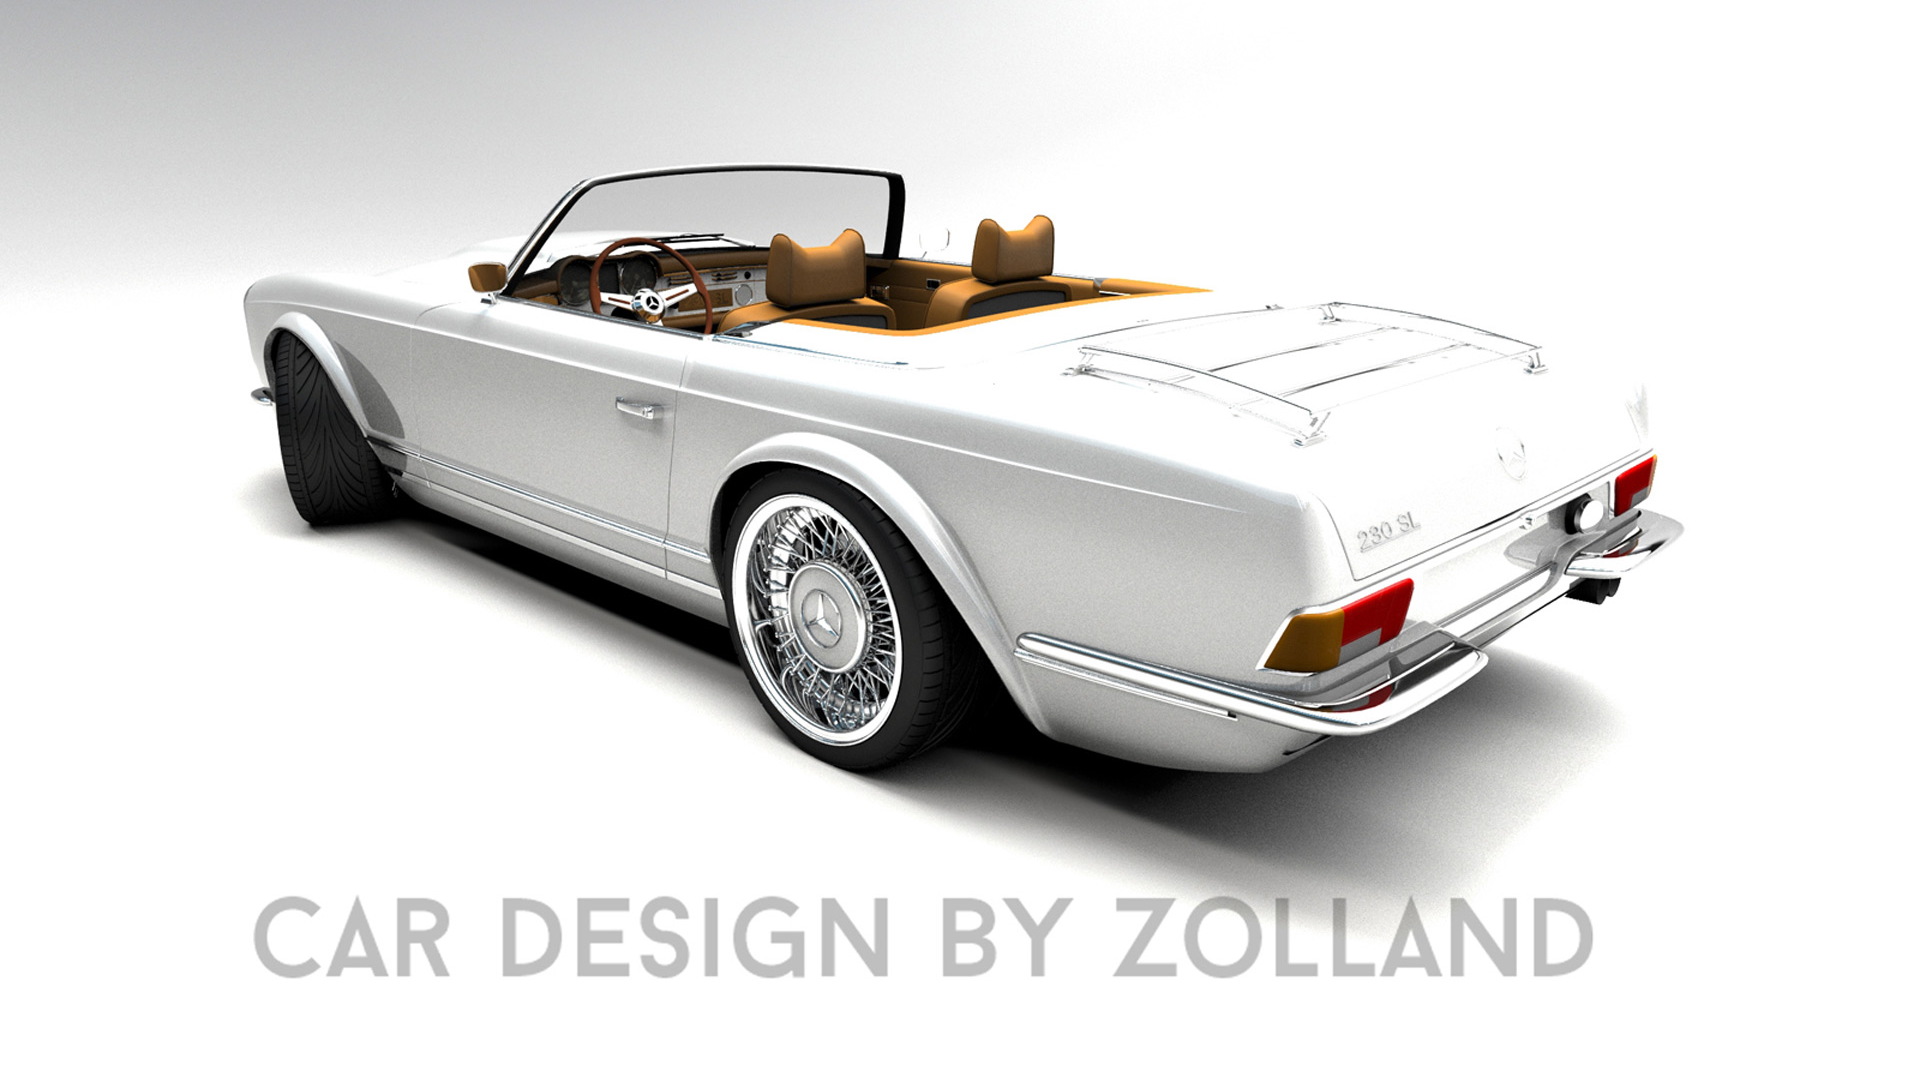 Zolland Design retro conversion for the fifth-generation Mercedes-Benz SL